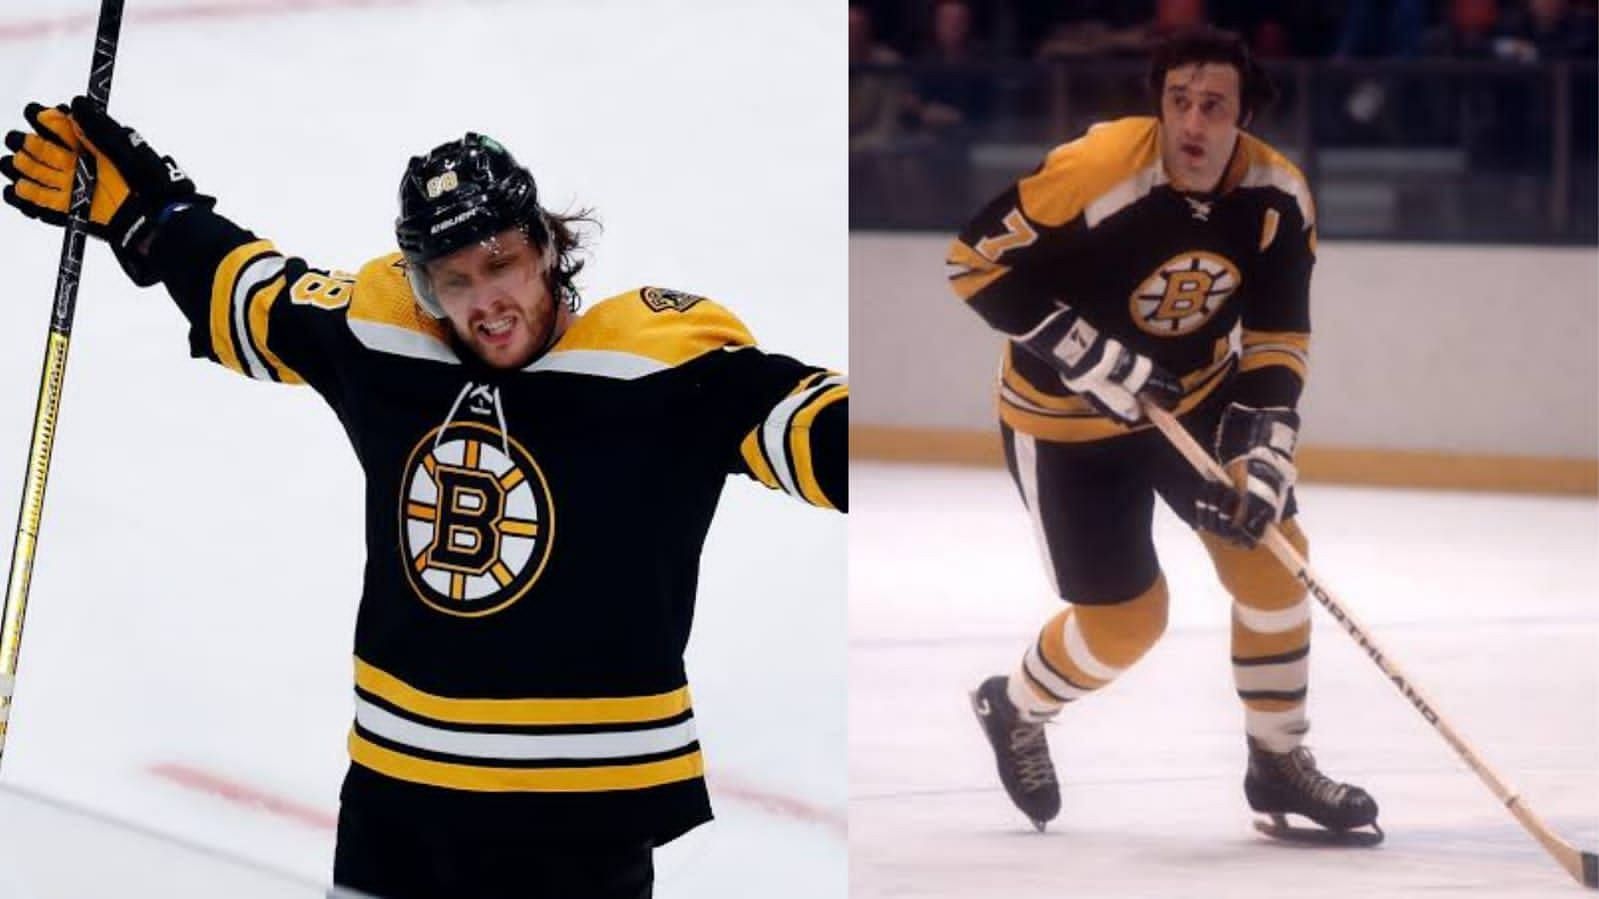 David Pastrnak's hat trick lead Boston Bruins past Philadelphia